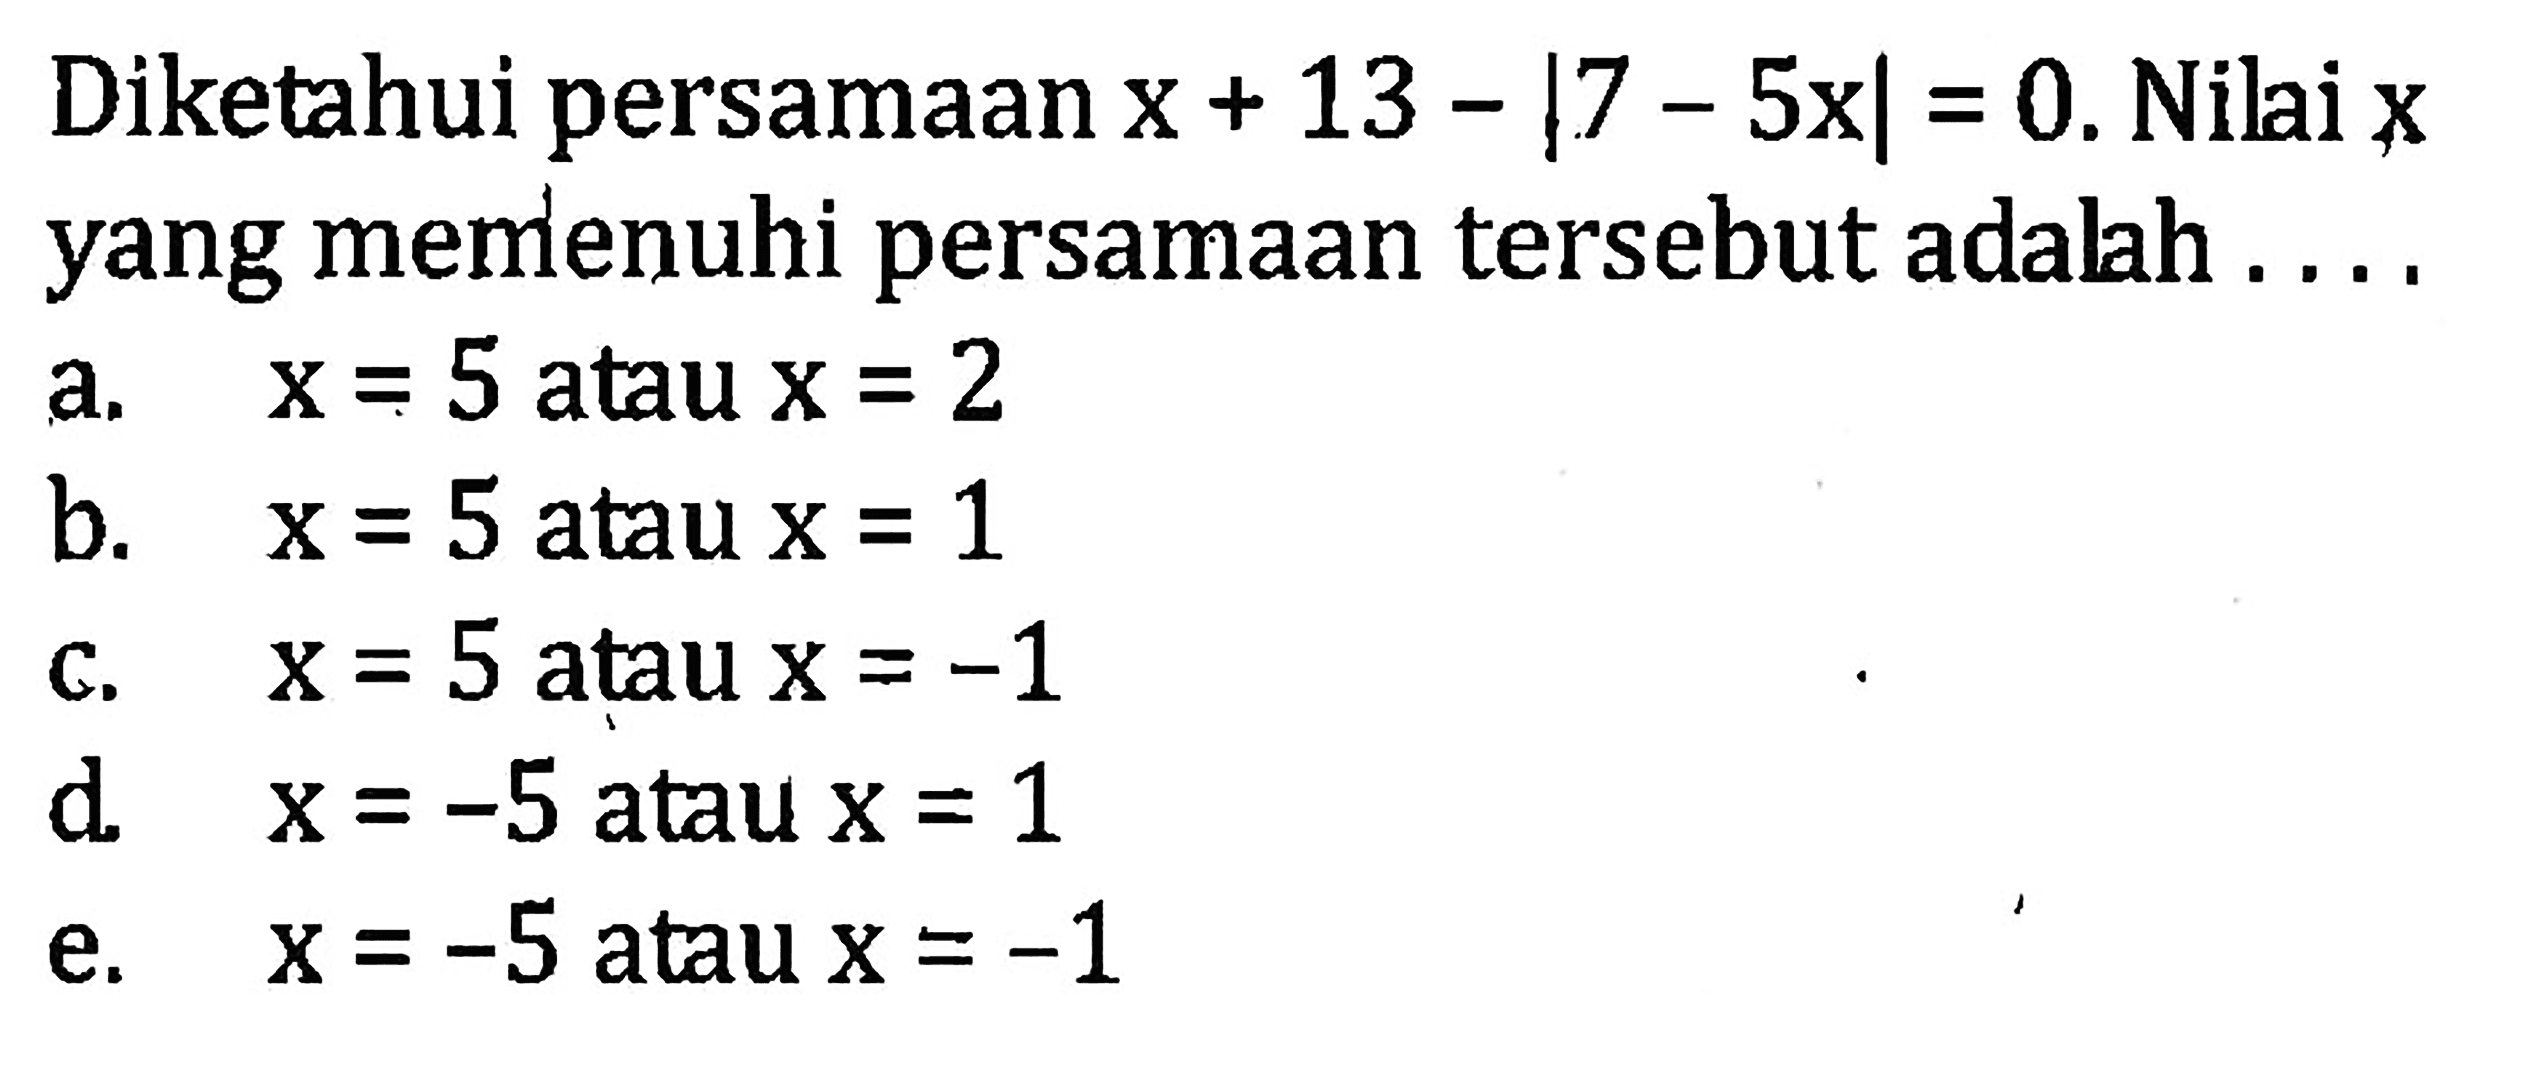 Diketahui persamaan x+13-|7-5x|=0. Nilai x yang memenuhi persamaan tersebut adalah....